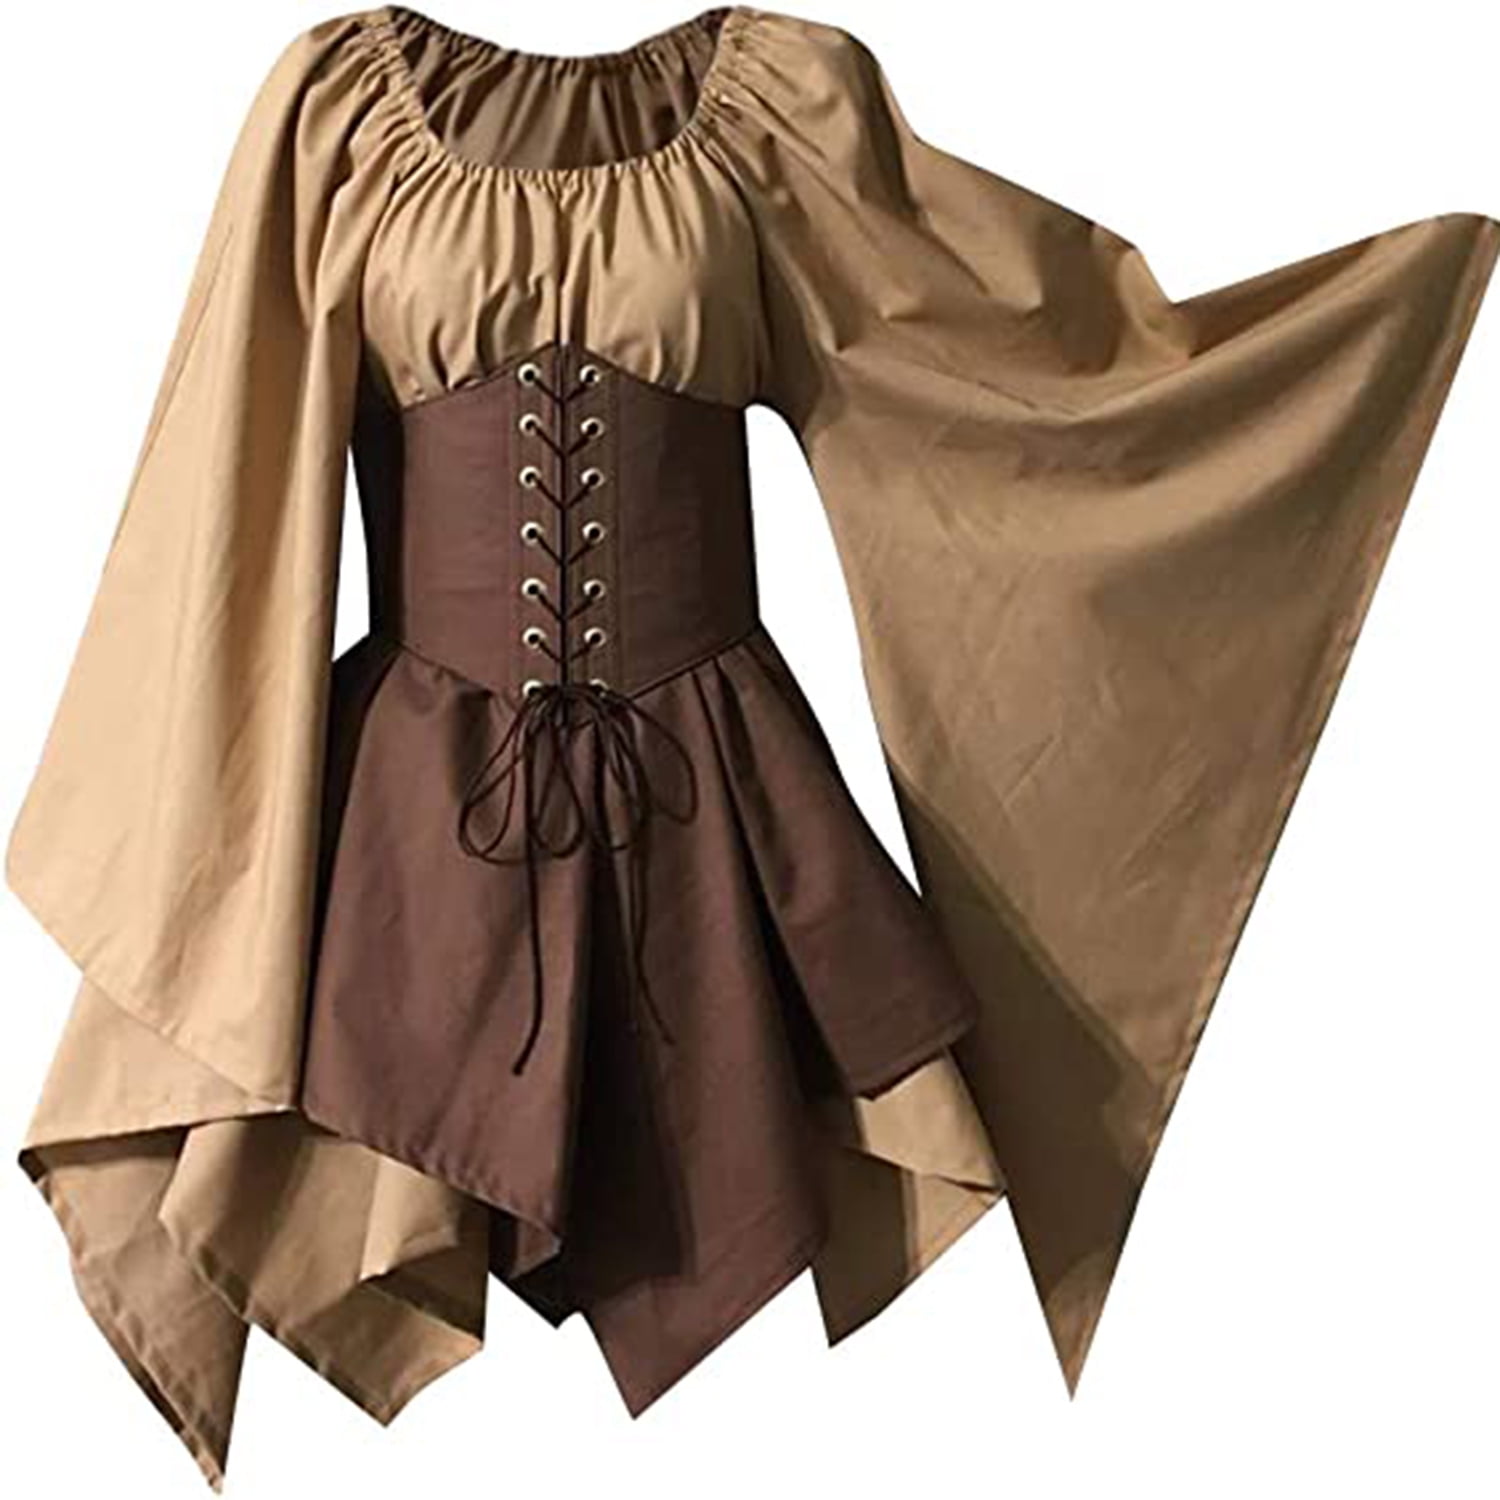 Women's Medieval Renaissance Costumes Pirate Corset Dress Women Flare  Sleeve Traditional Irish Short Dress